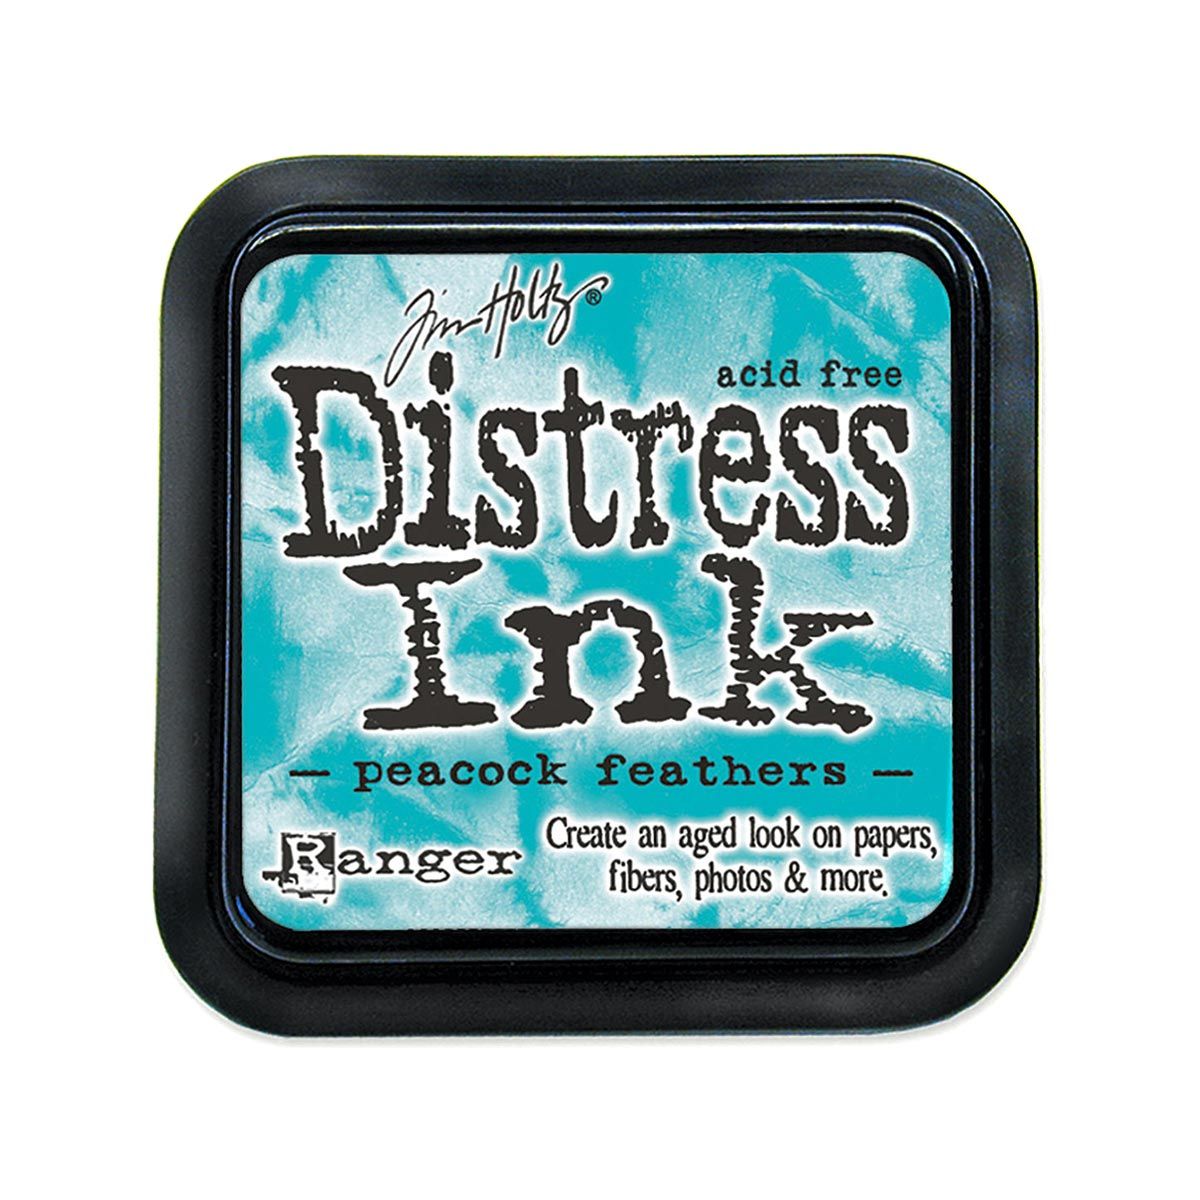 Tim Holtz Mini Distress Ink Pad Peacock Feathers 1x1 inch